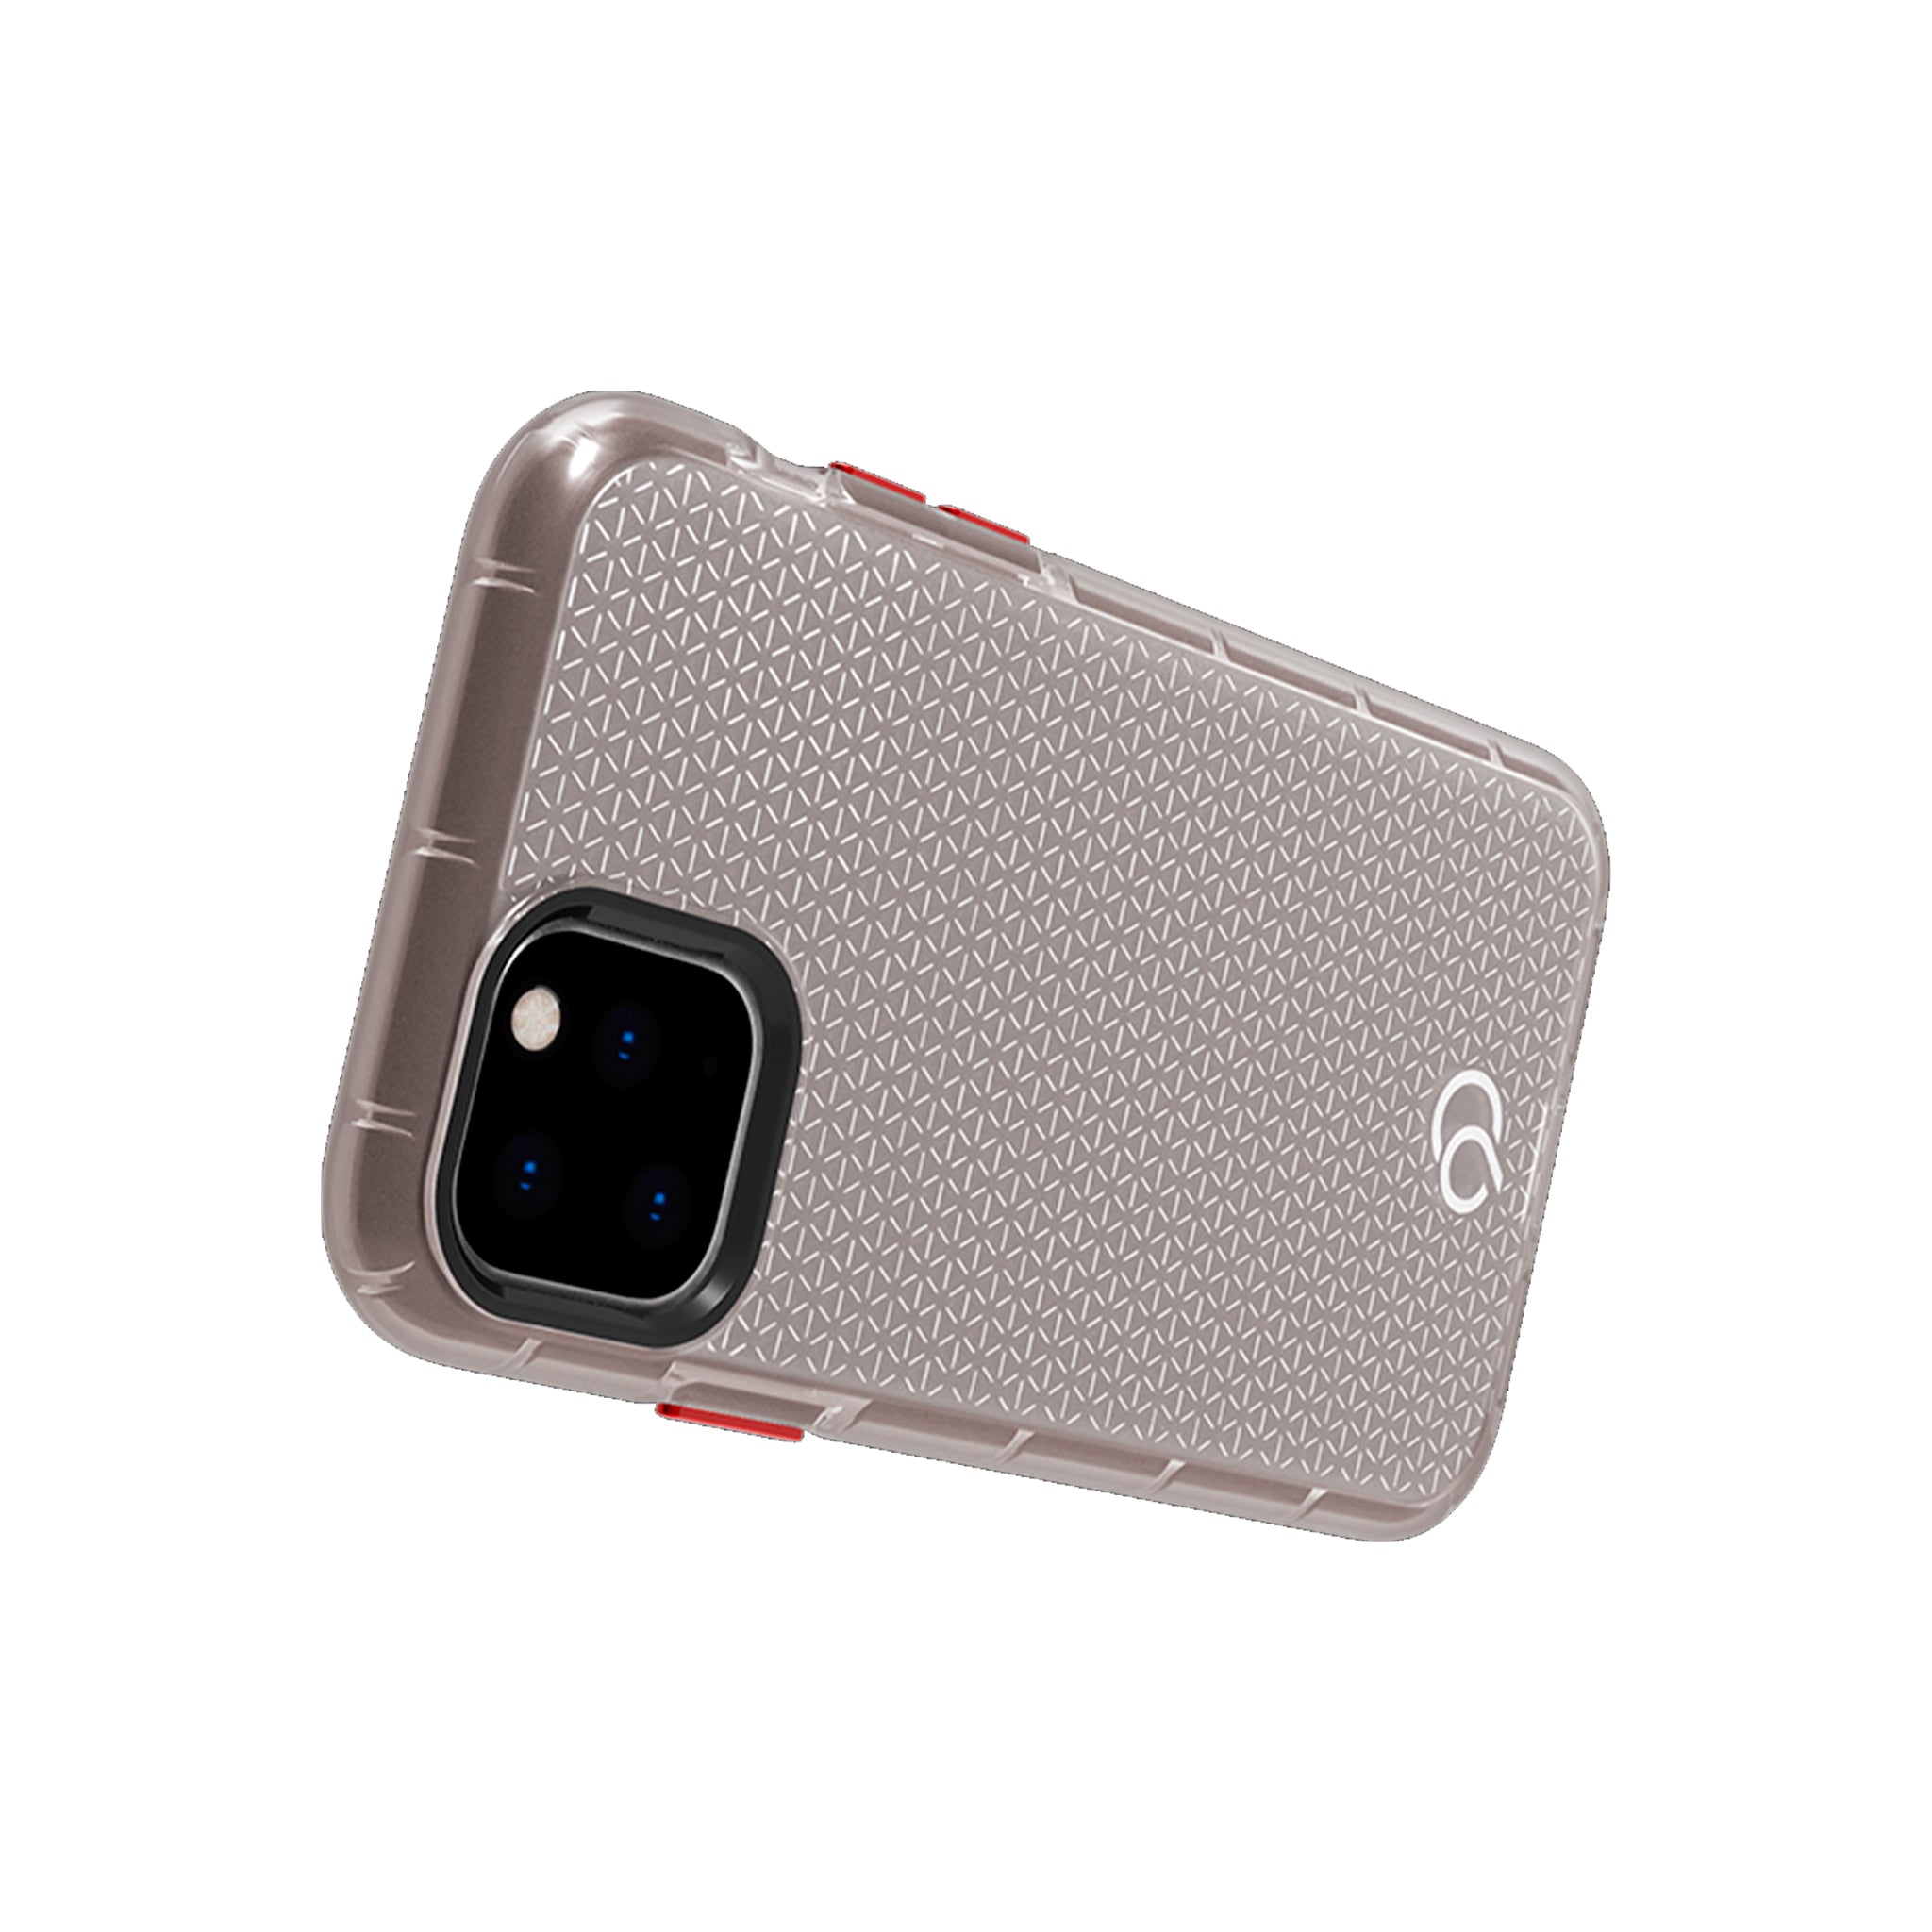 Nimbus9 - Phantom 2 Case For Apple Iphone 11 Pro - Carbon